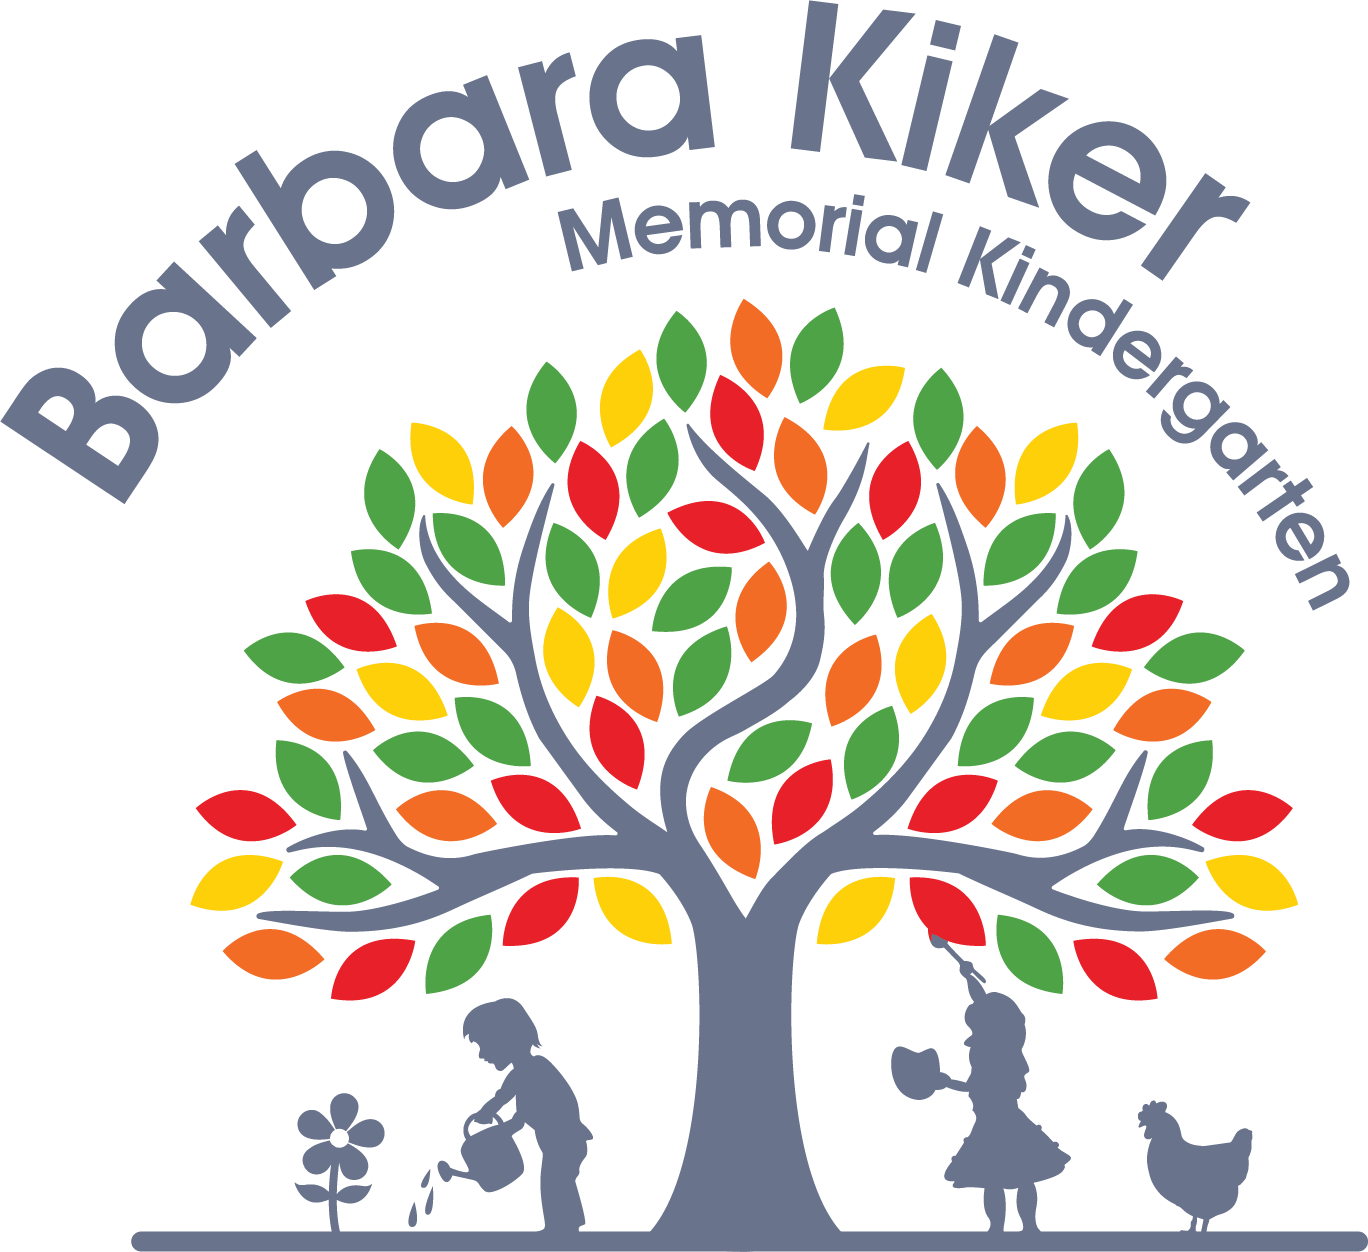 Barbara Kiker Memorial Kindergarten's logo